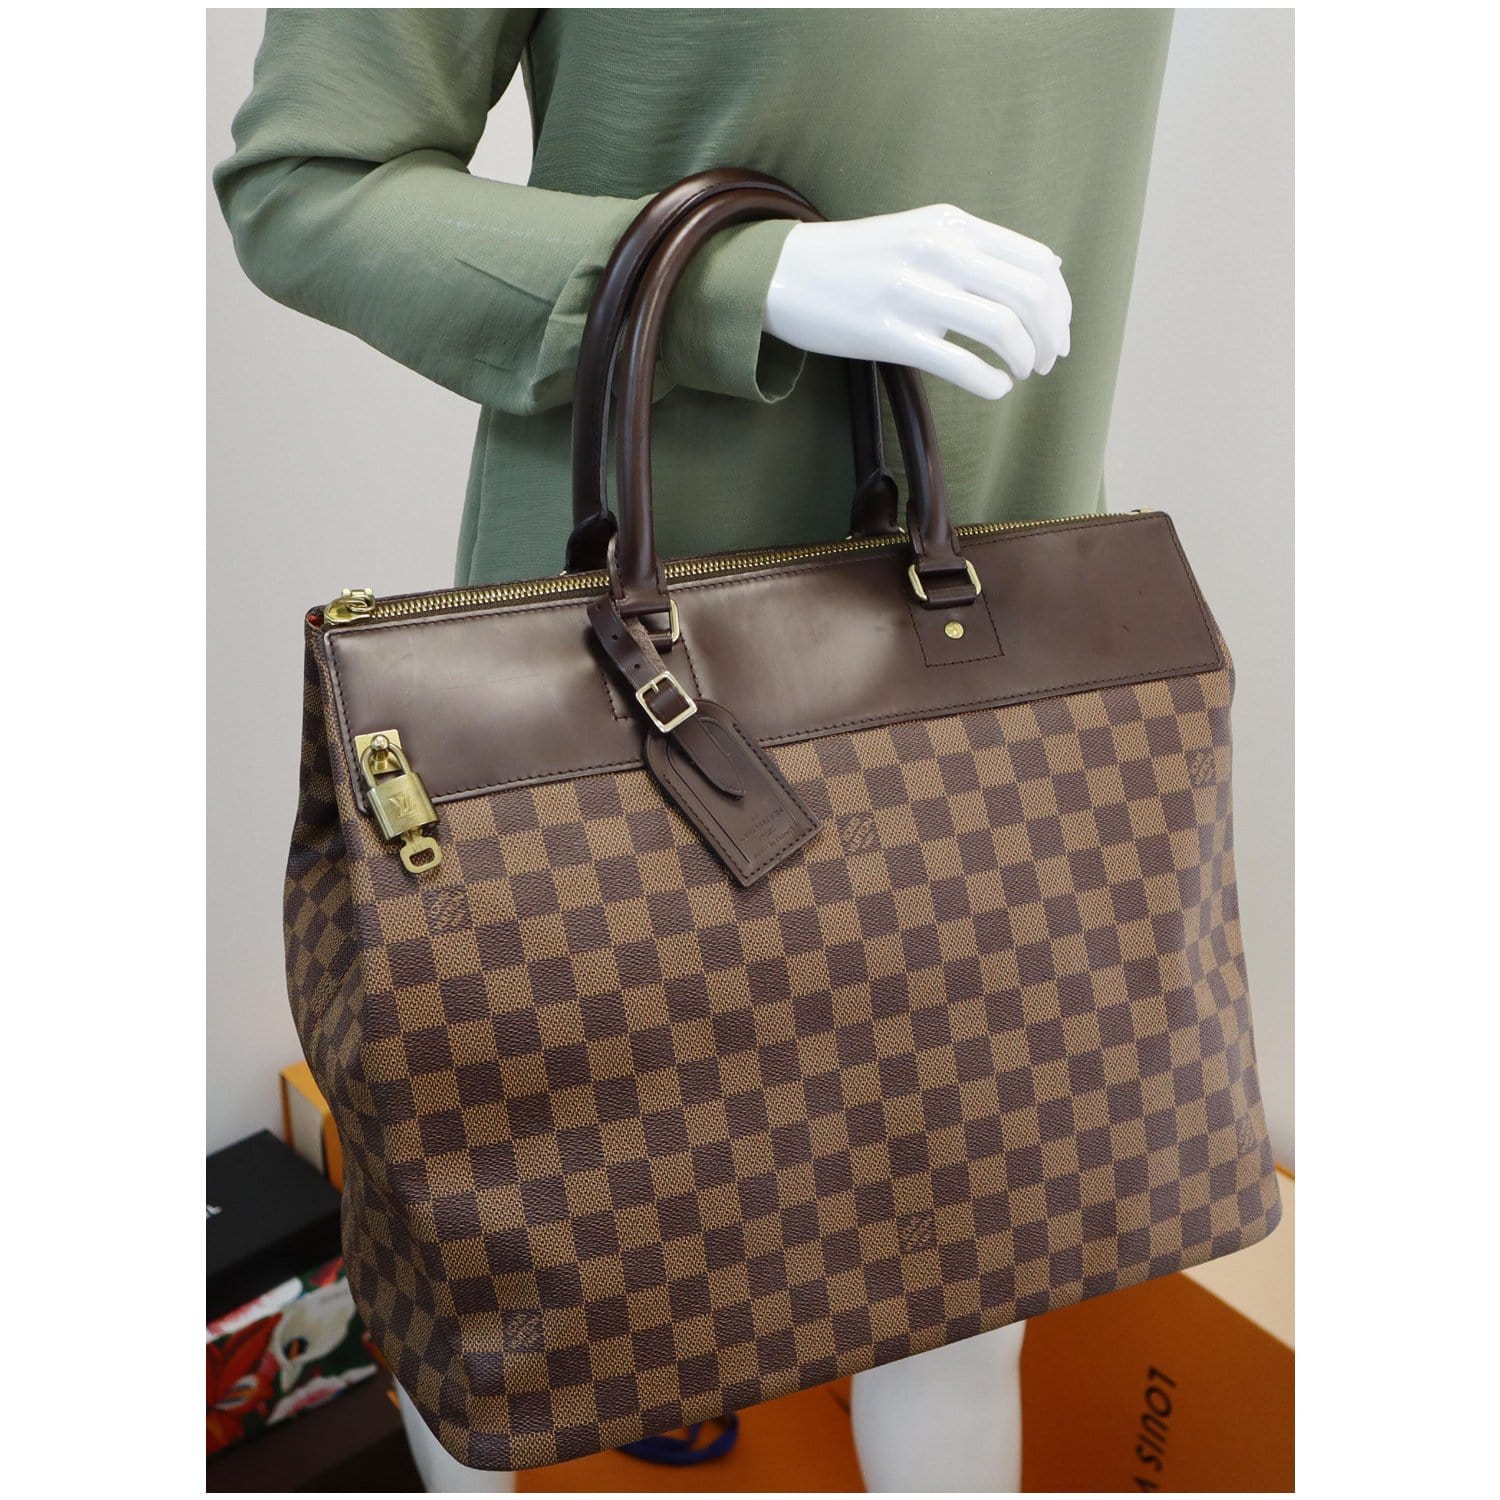 Louis Vuitton Greenwich PM Damier Ebene Travel Tote Bag Brown